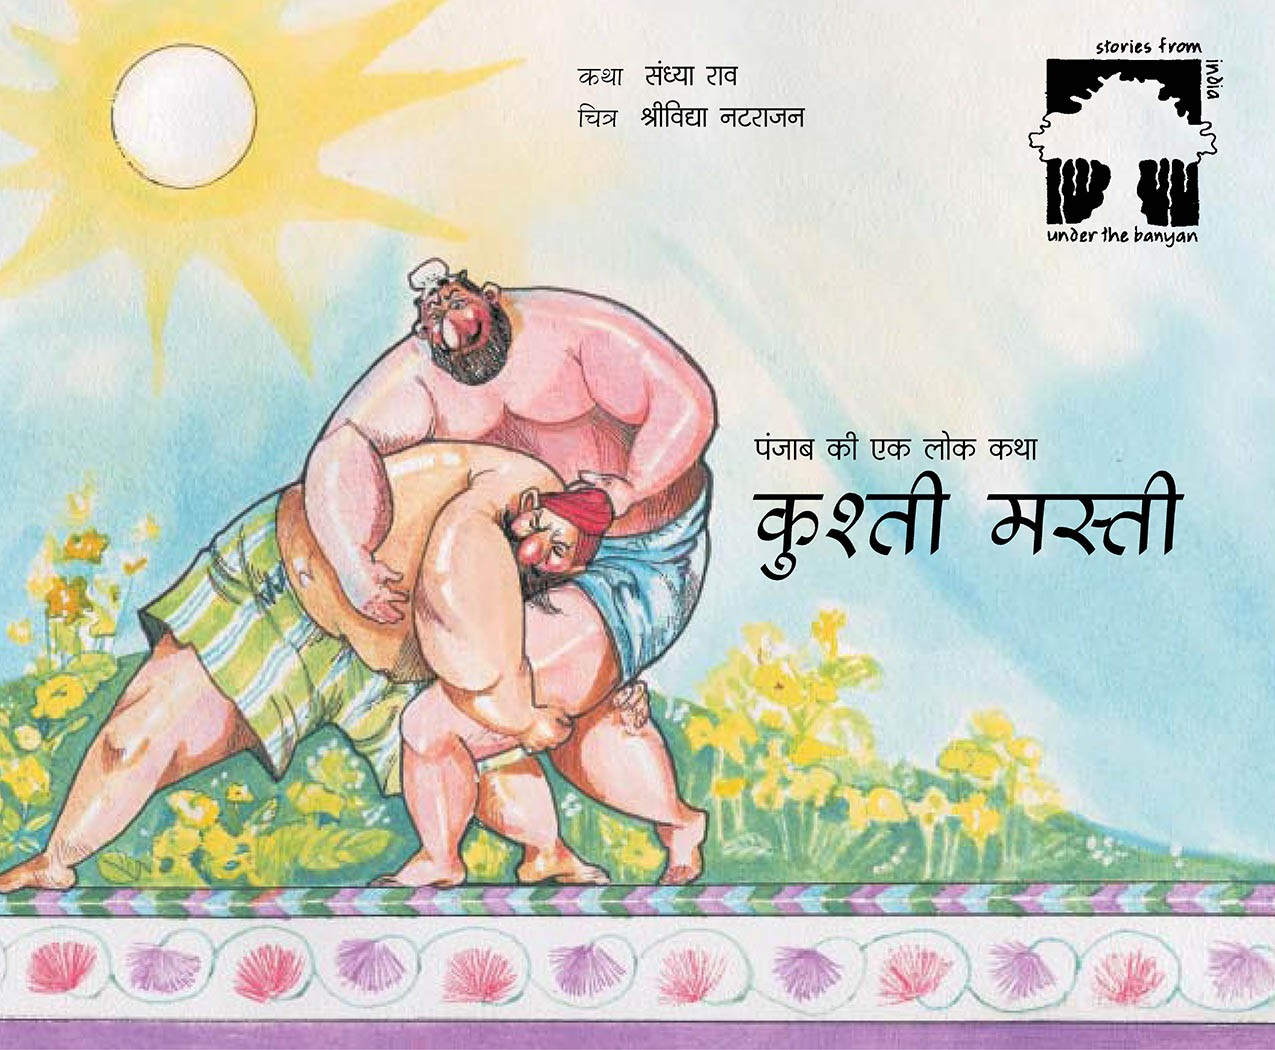 Wrestling Mania/Kushti Masti (Hindi)